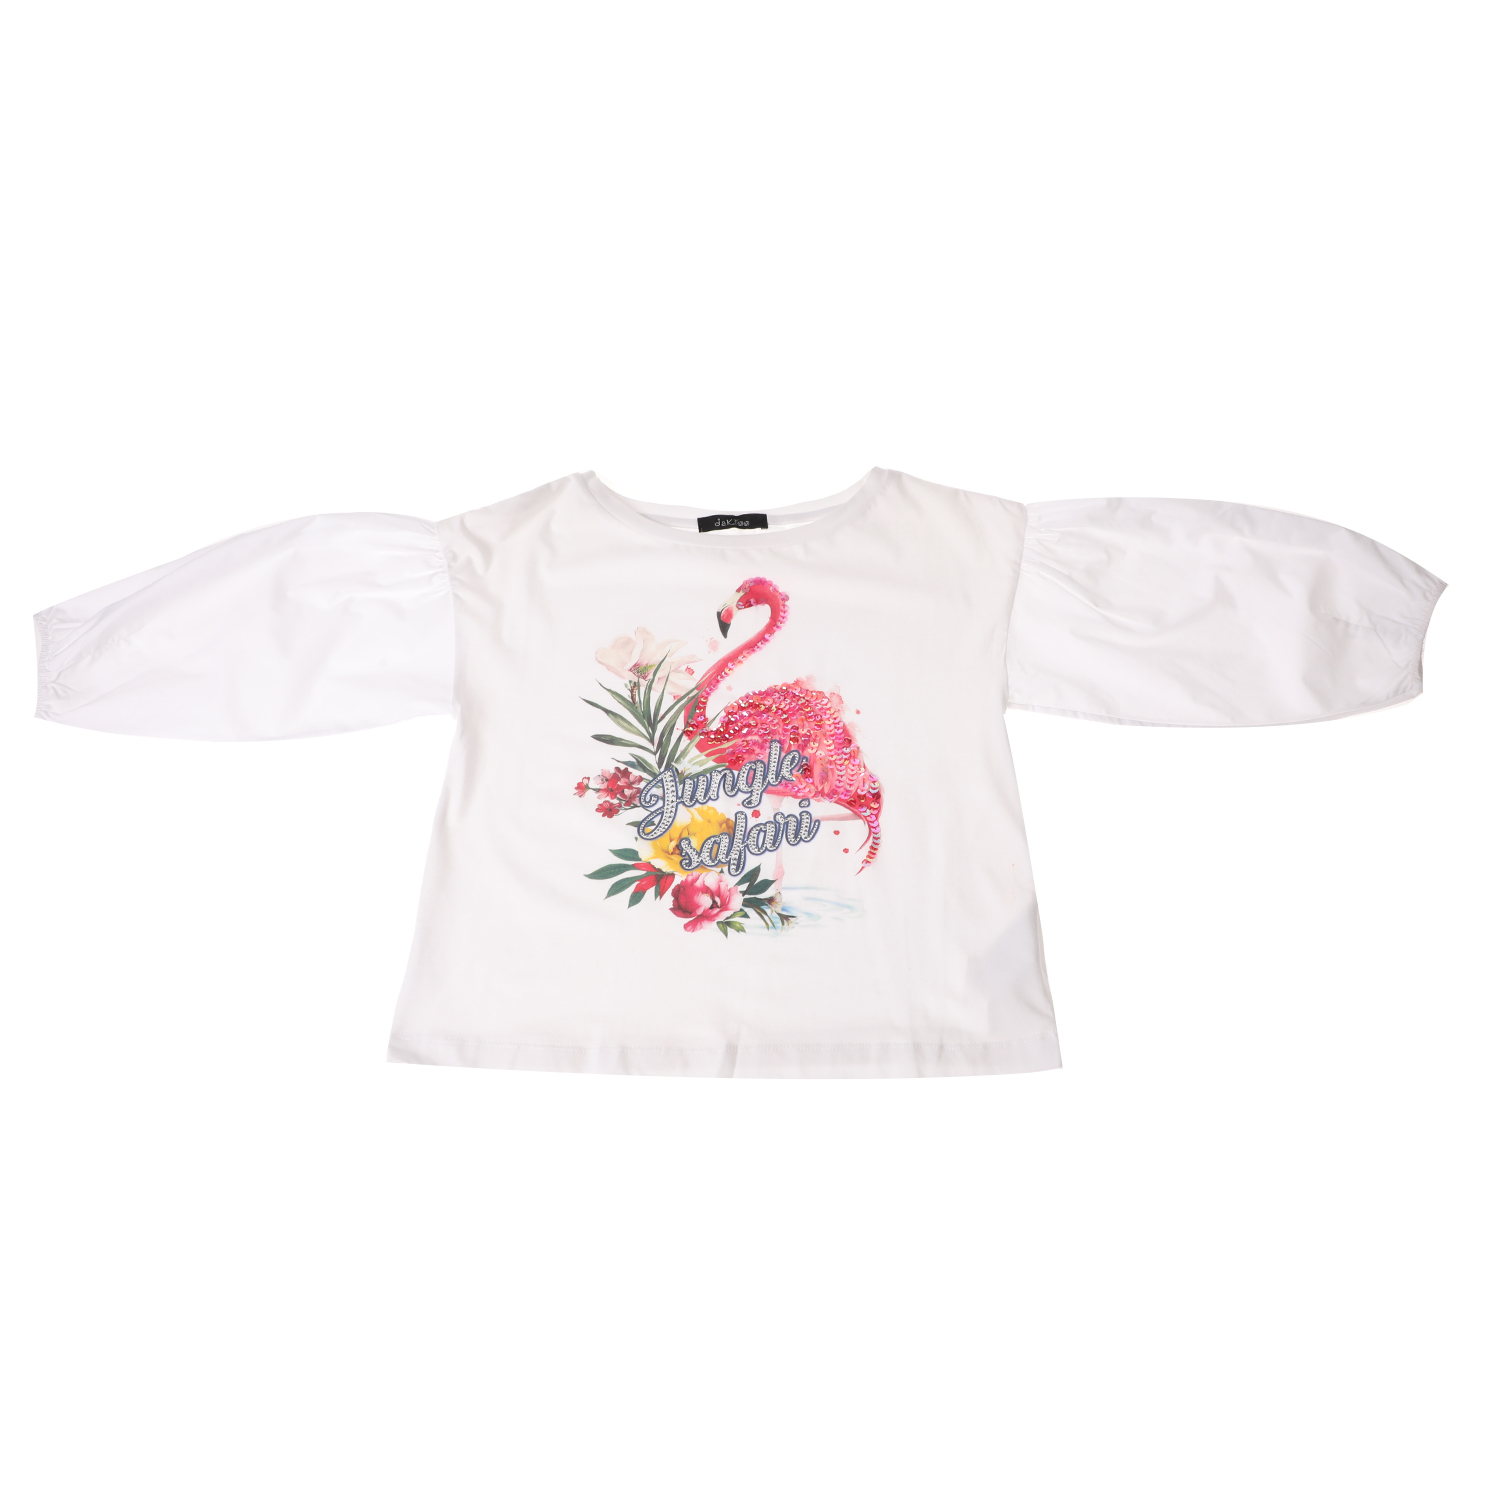 JAKIOO - Παιδικό t-shirt JAKIOO ST.FENICOTTERO λευκό Παιδικά/Girls/Ρούχα/Μπλούζες Κοντομάνικες-Αμάνικες